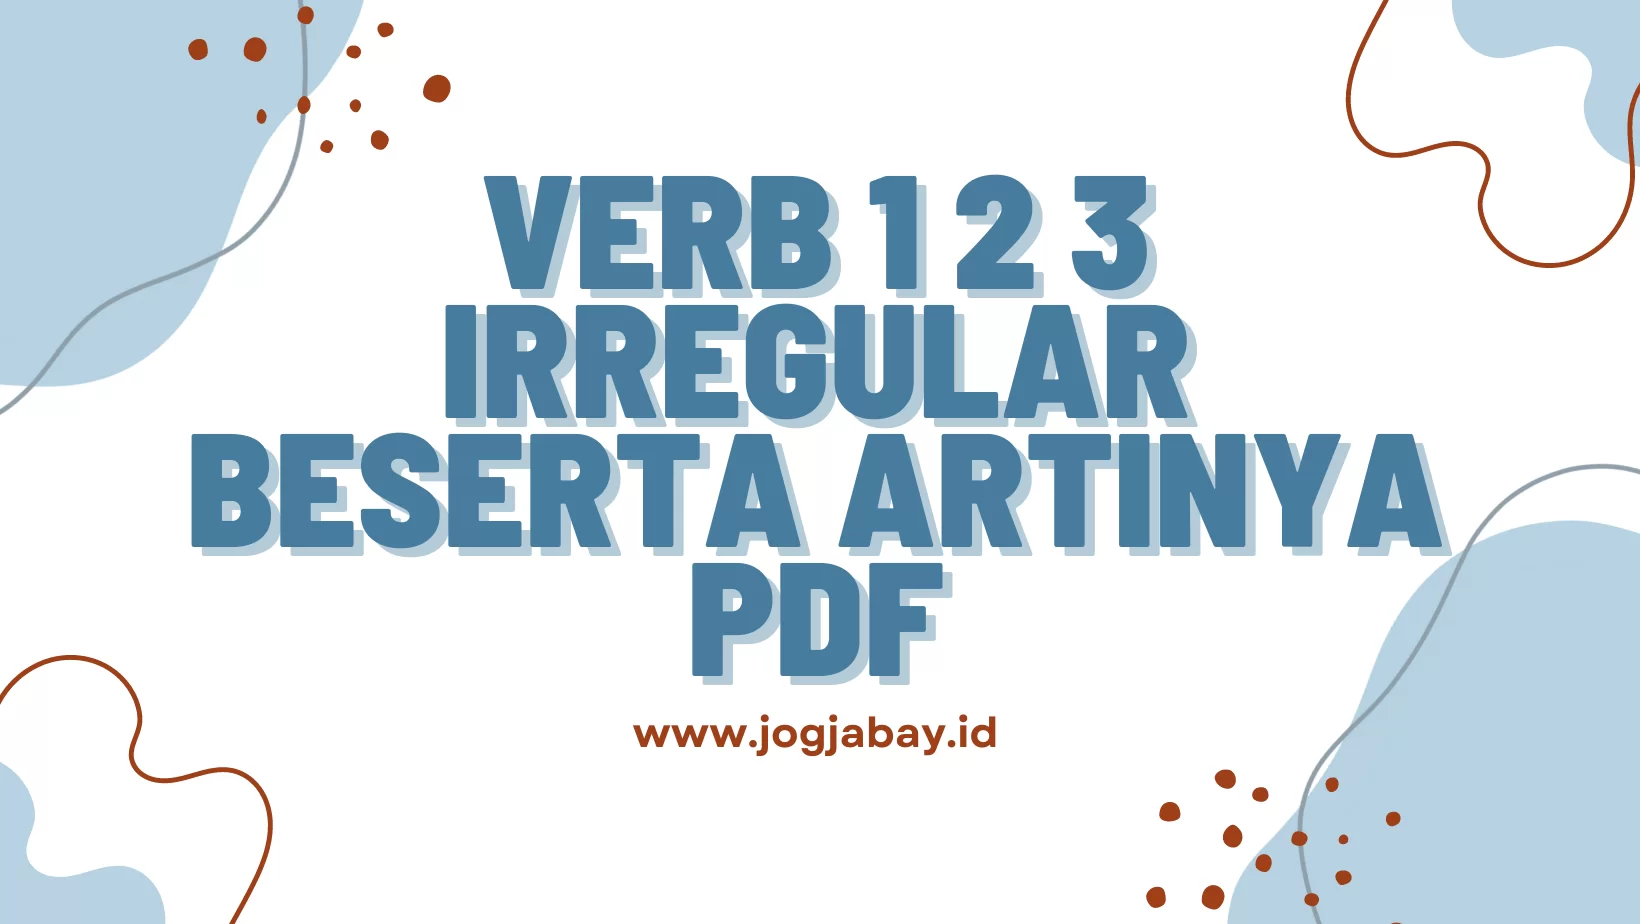 Verb 1 2 3 Irregular Beserta Artinya PDF